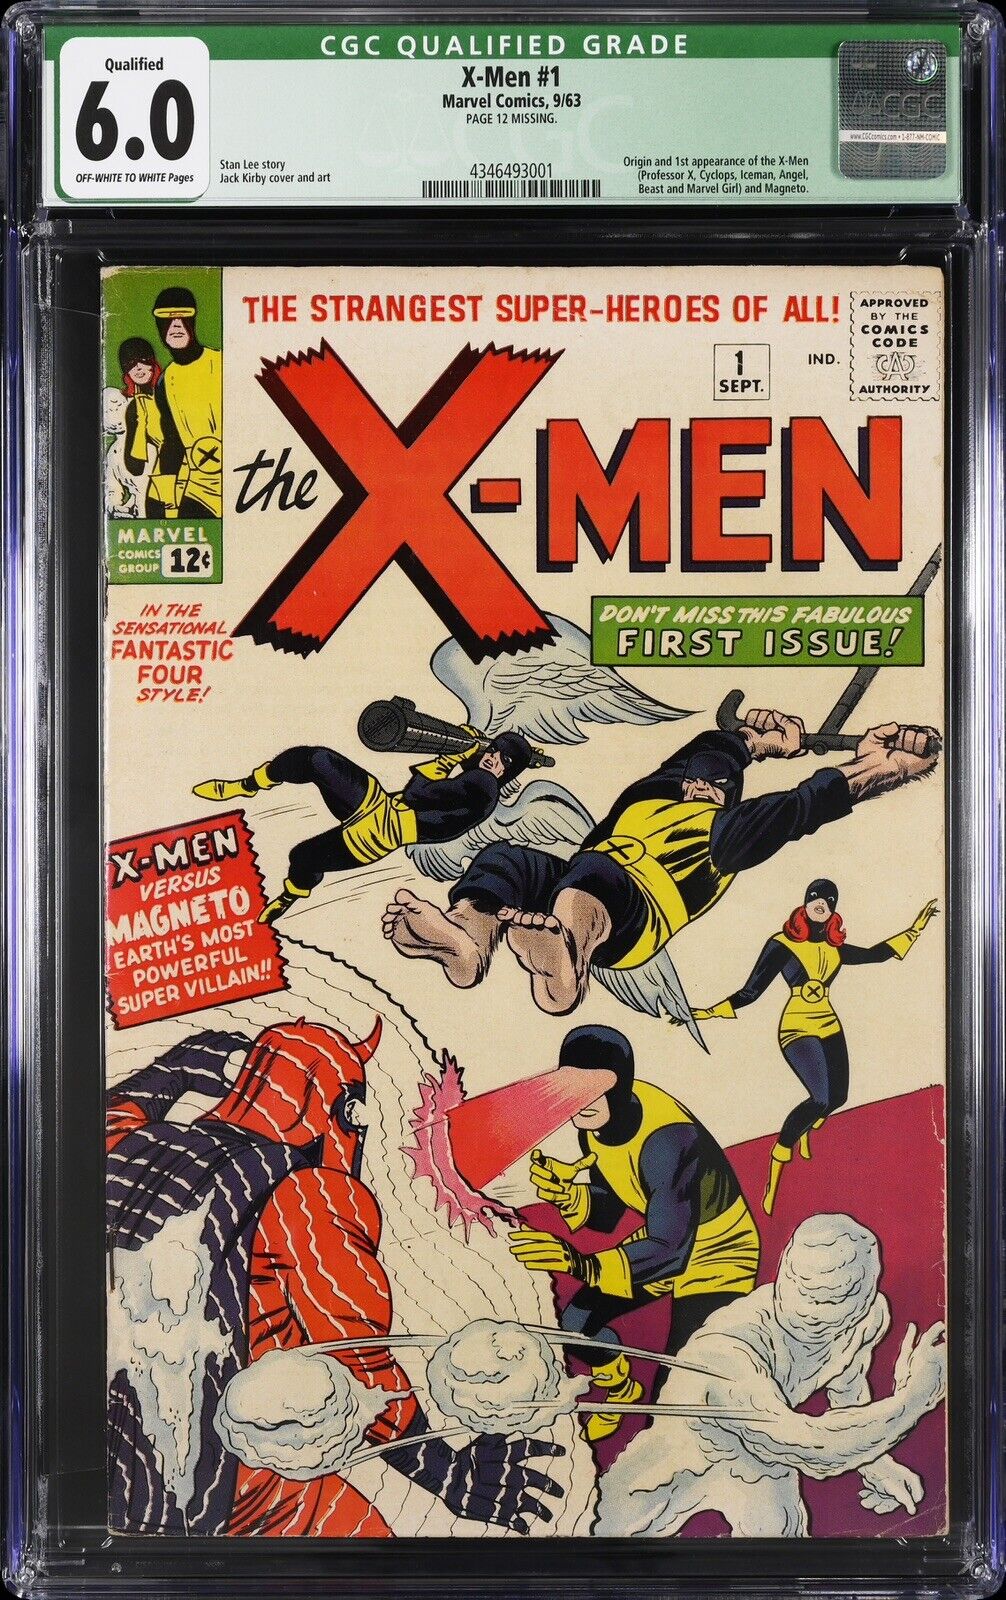 X-Men #1 CGC 6.0 Qualified 1963 Origin and 1st App of the X-Men and Magneto.